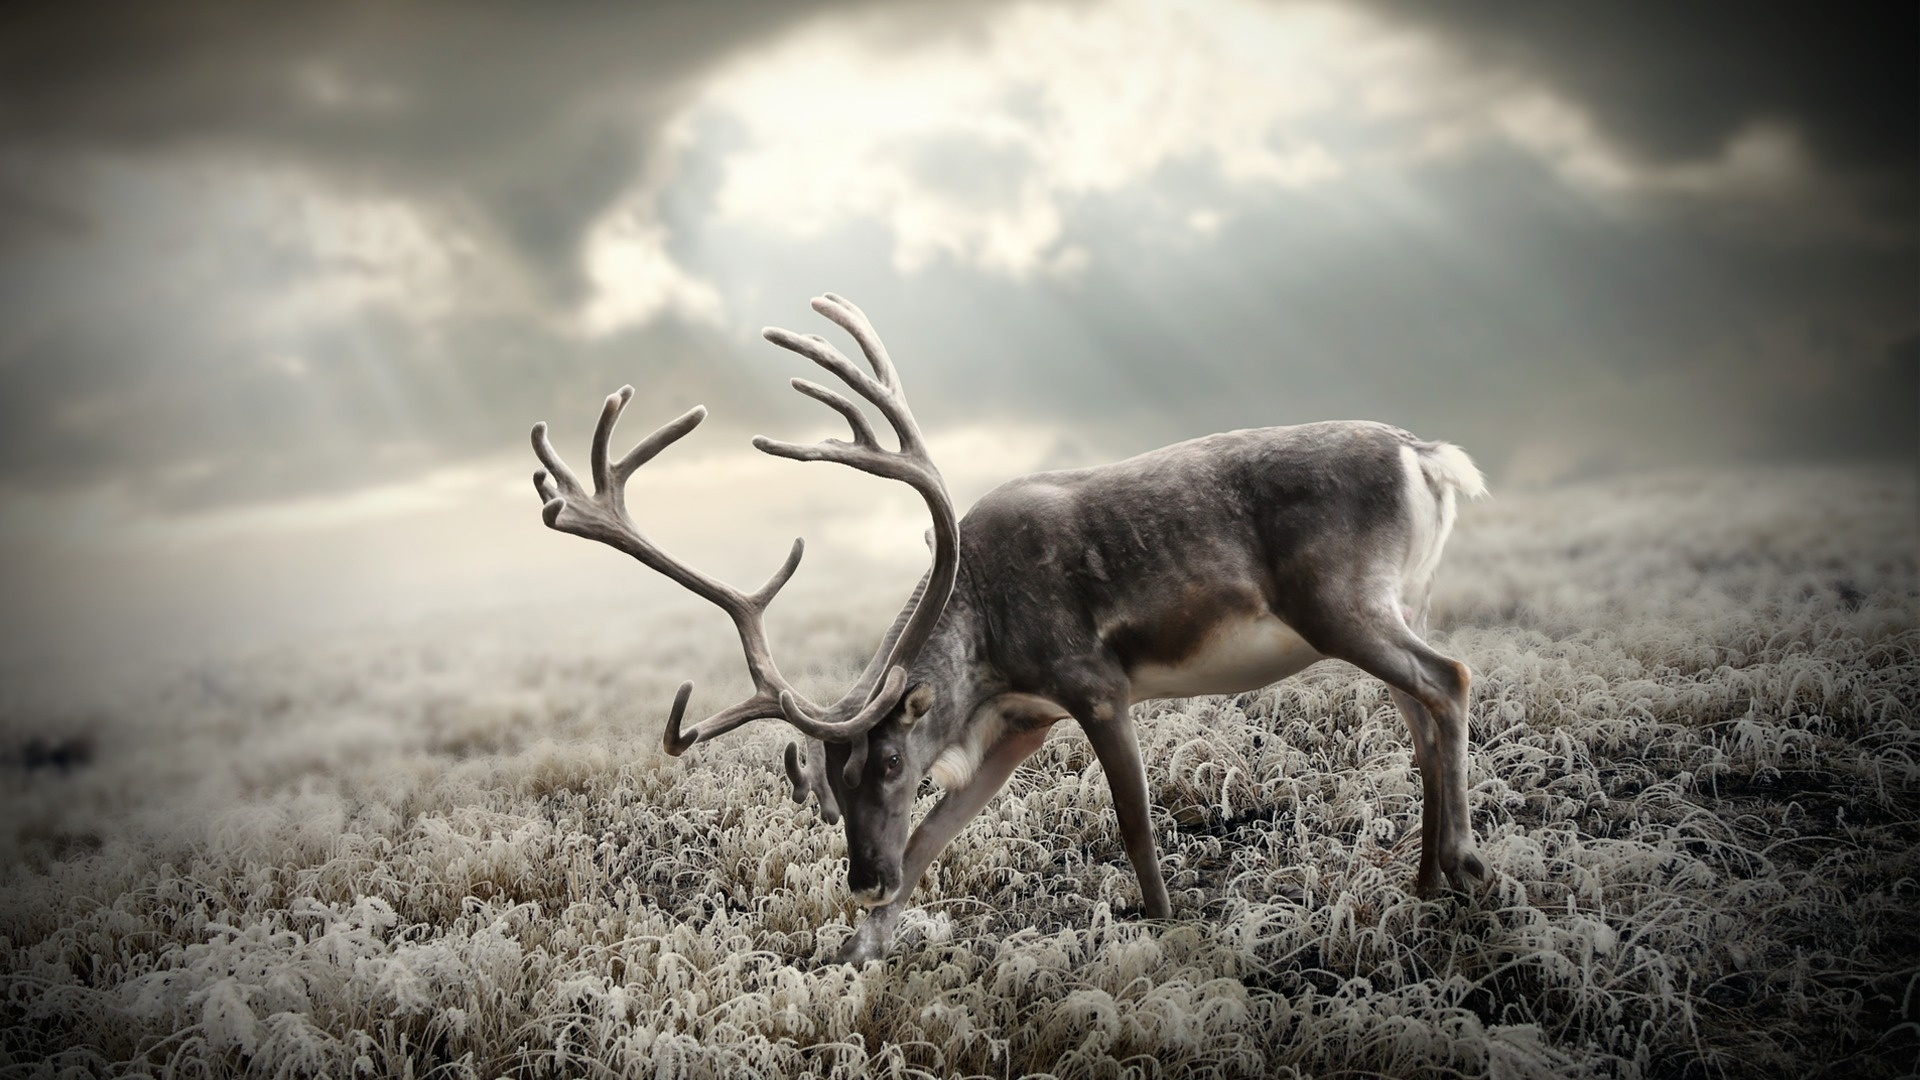 Enchanting deer, Scenic wallpapers, Animal beauty, Nature's wonder, 1920x1080 Full HD Desktop